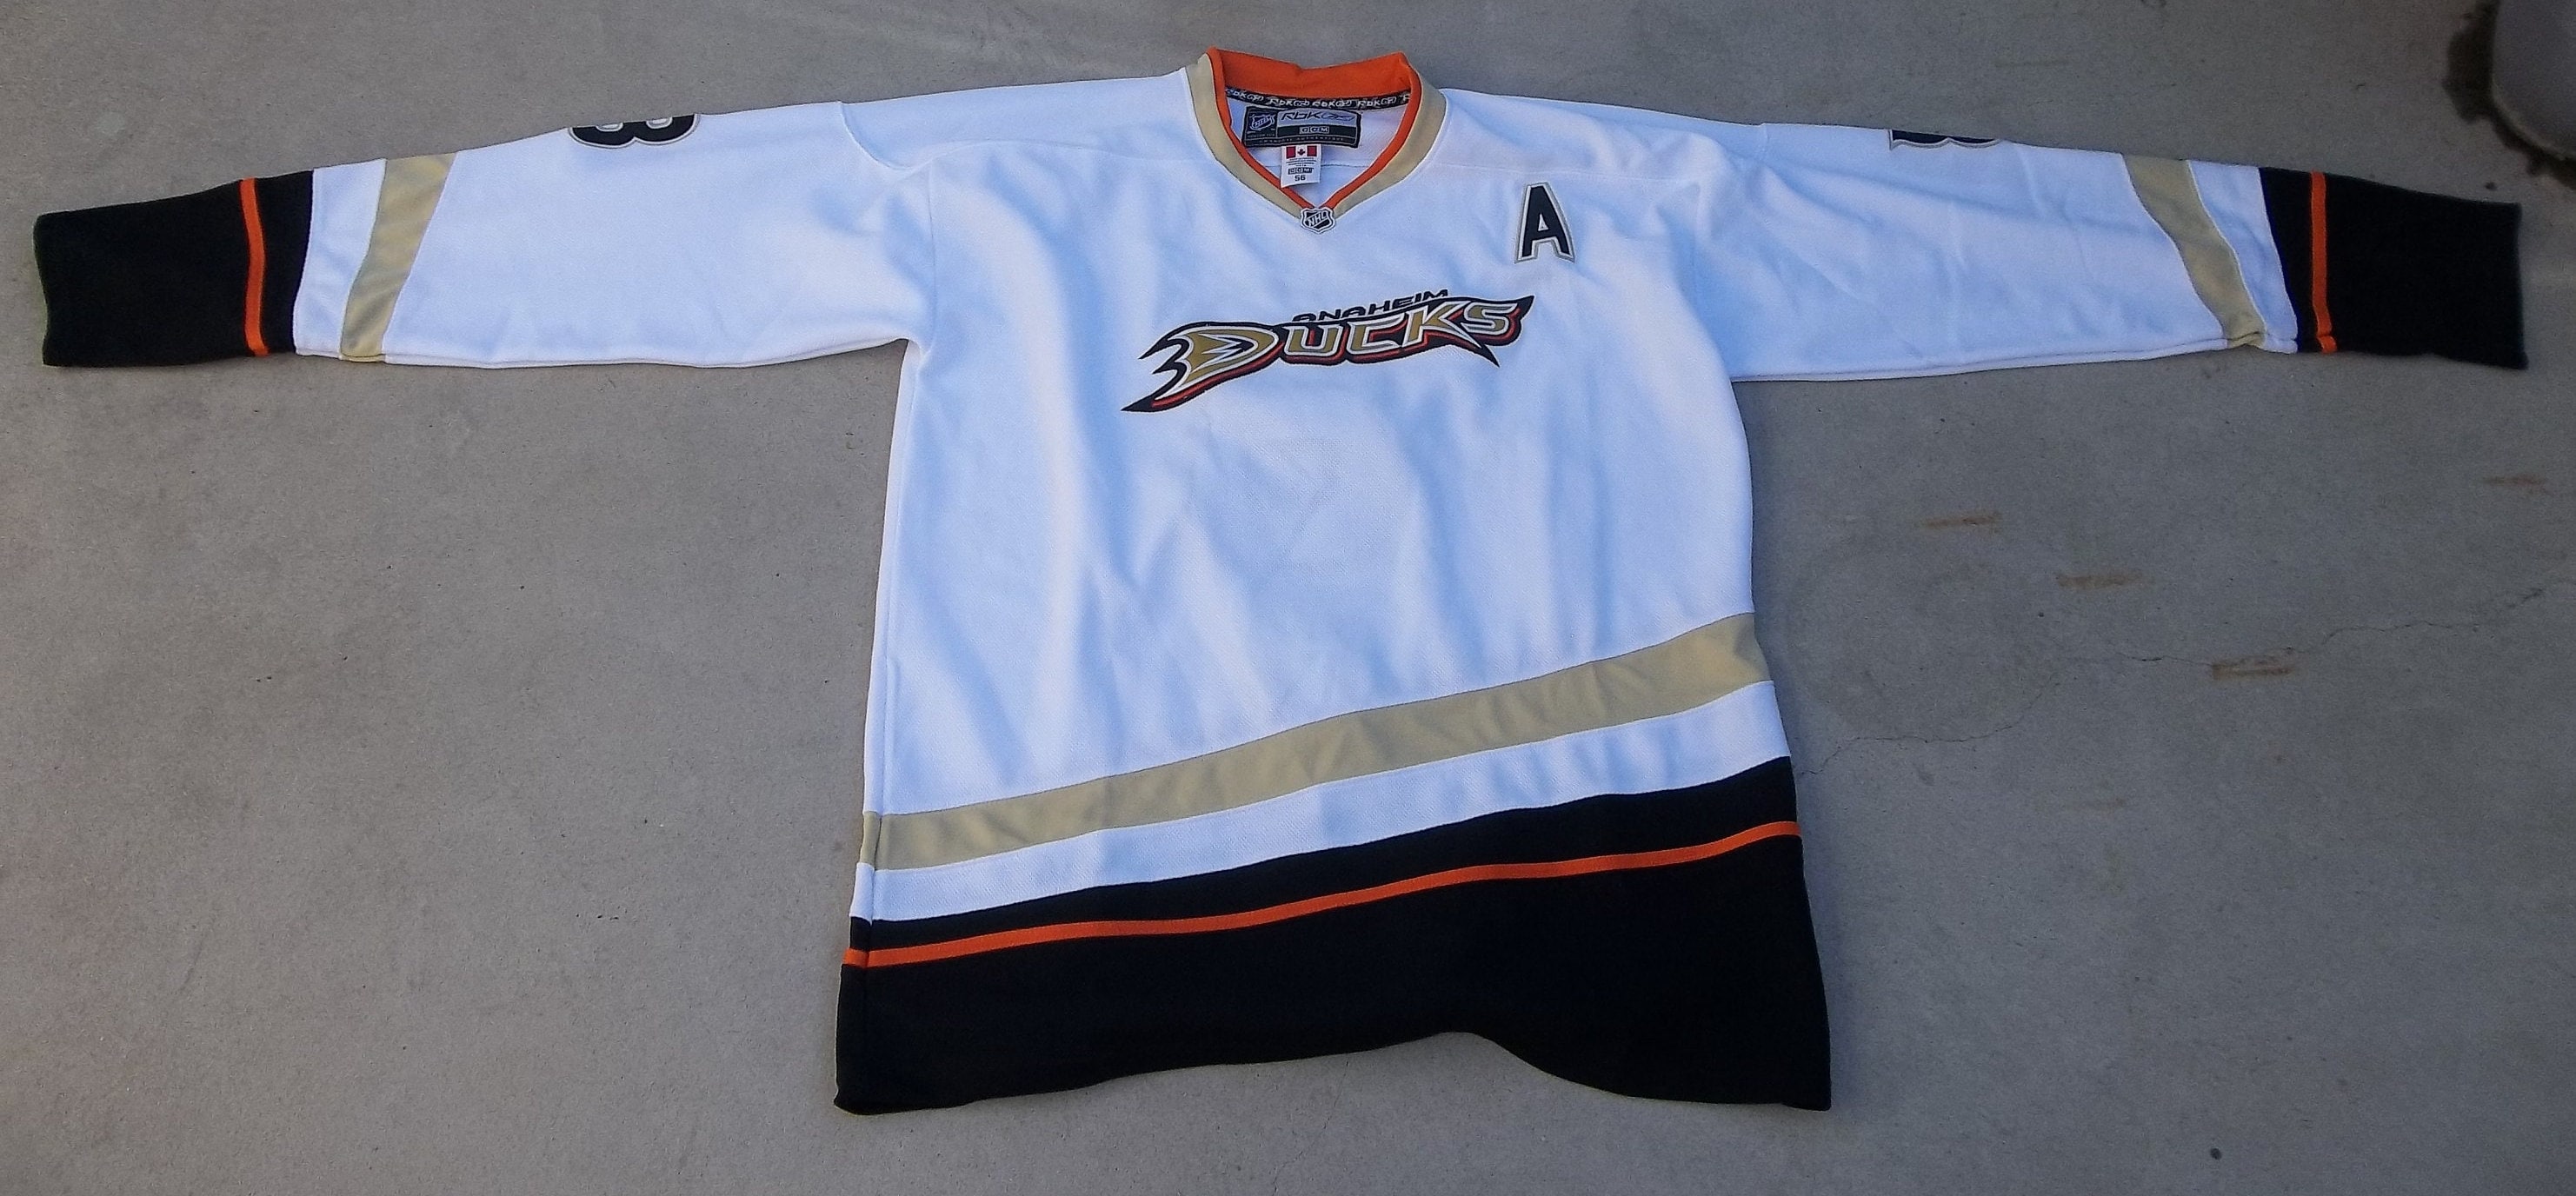 Mighty Ducks fly again: Behold glorious throwback Anaheim Ducks jerseys  (Photo)